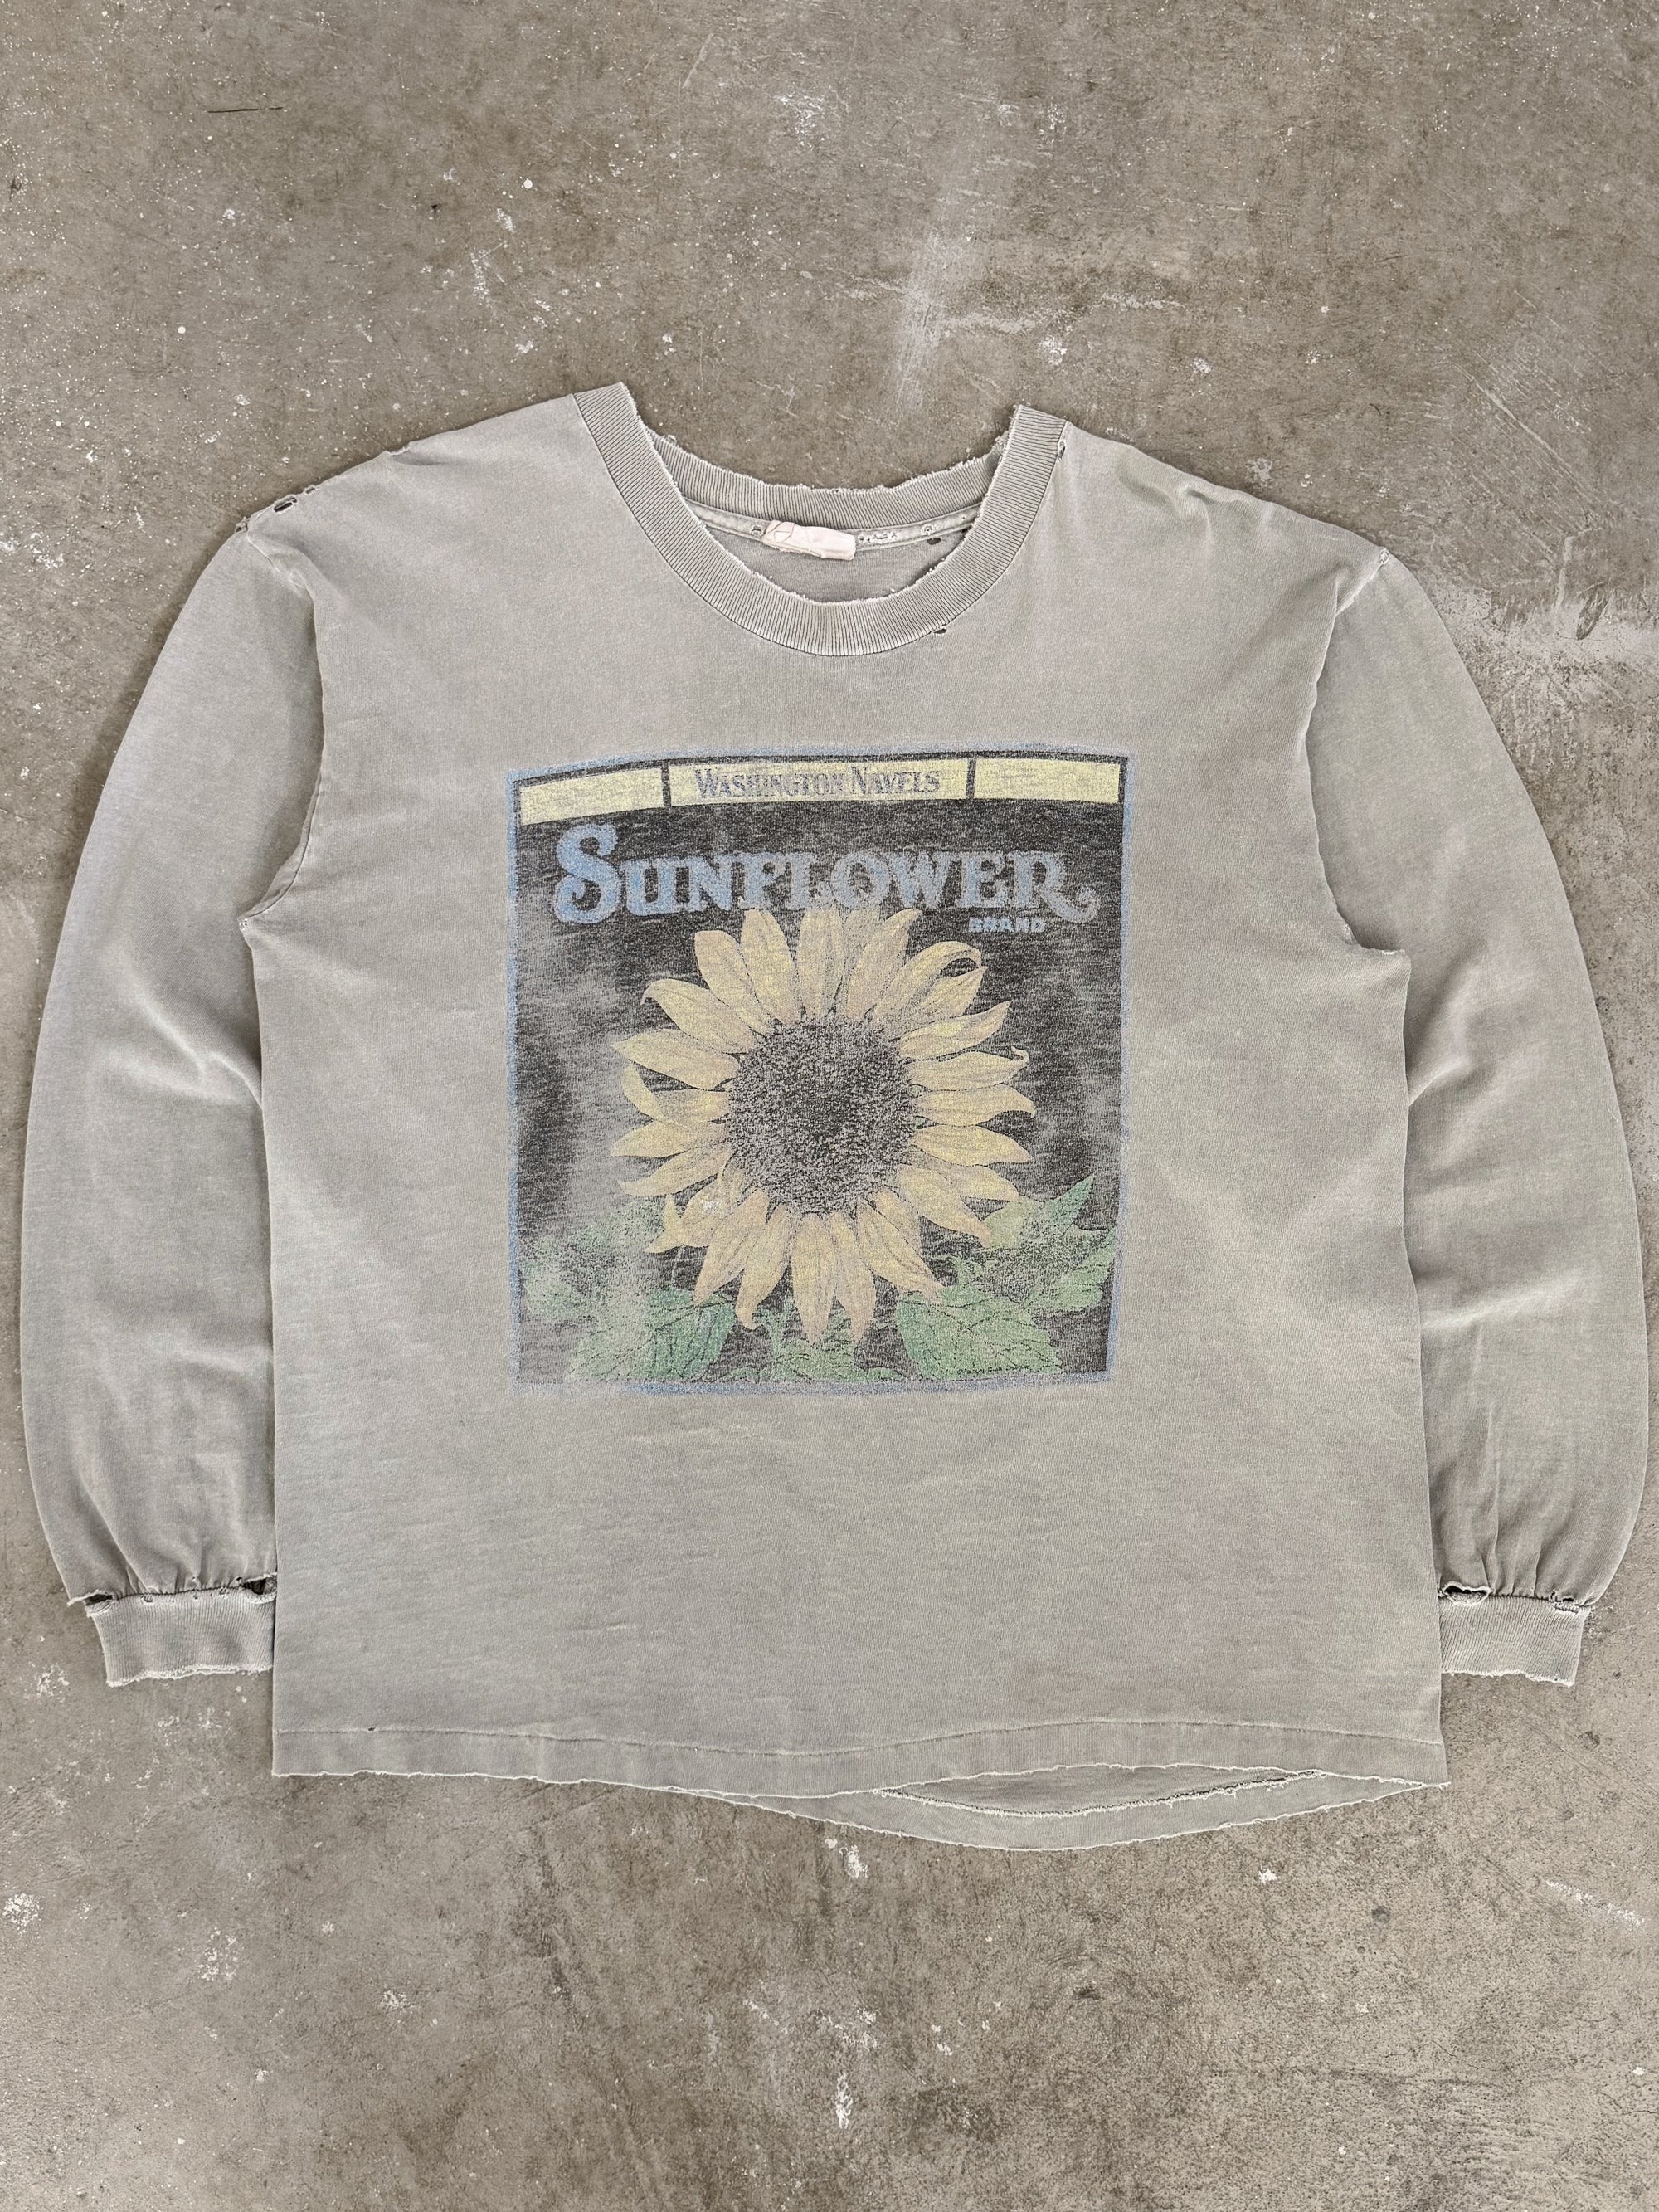 1990s "Sunflower" Distressed Long Sleeve Tee (L)